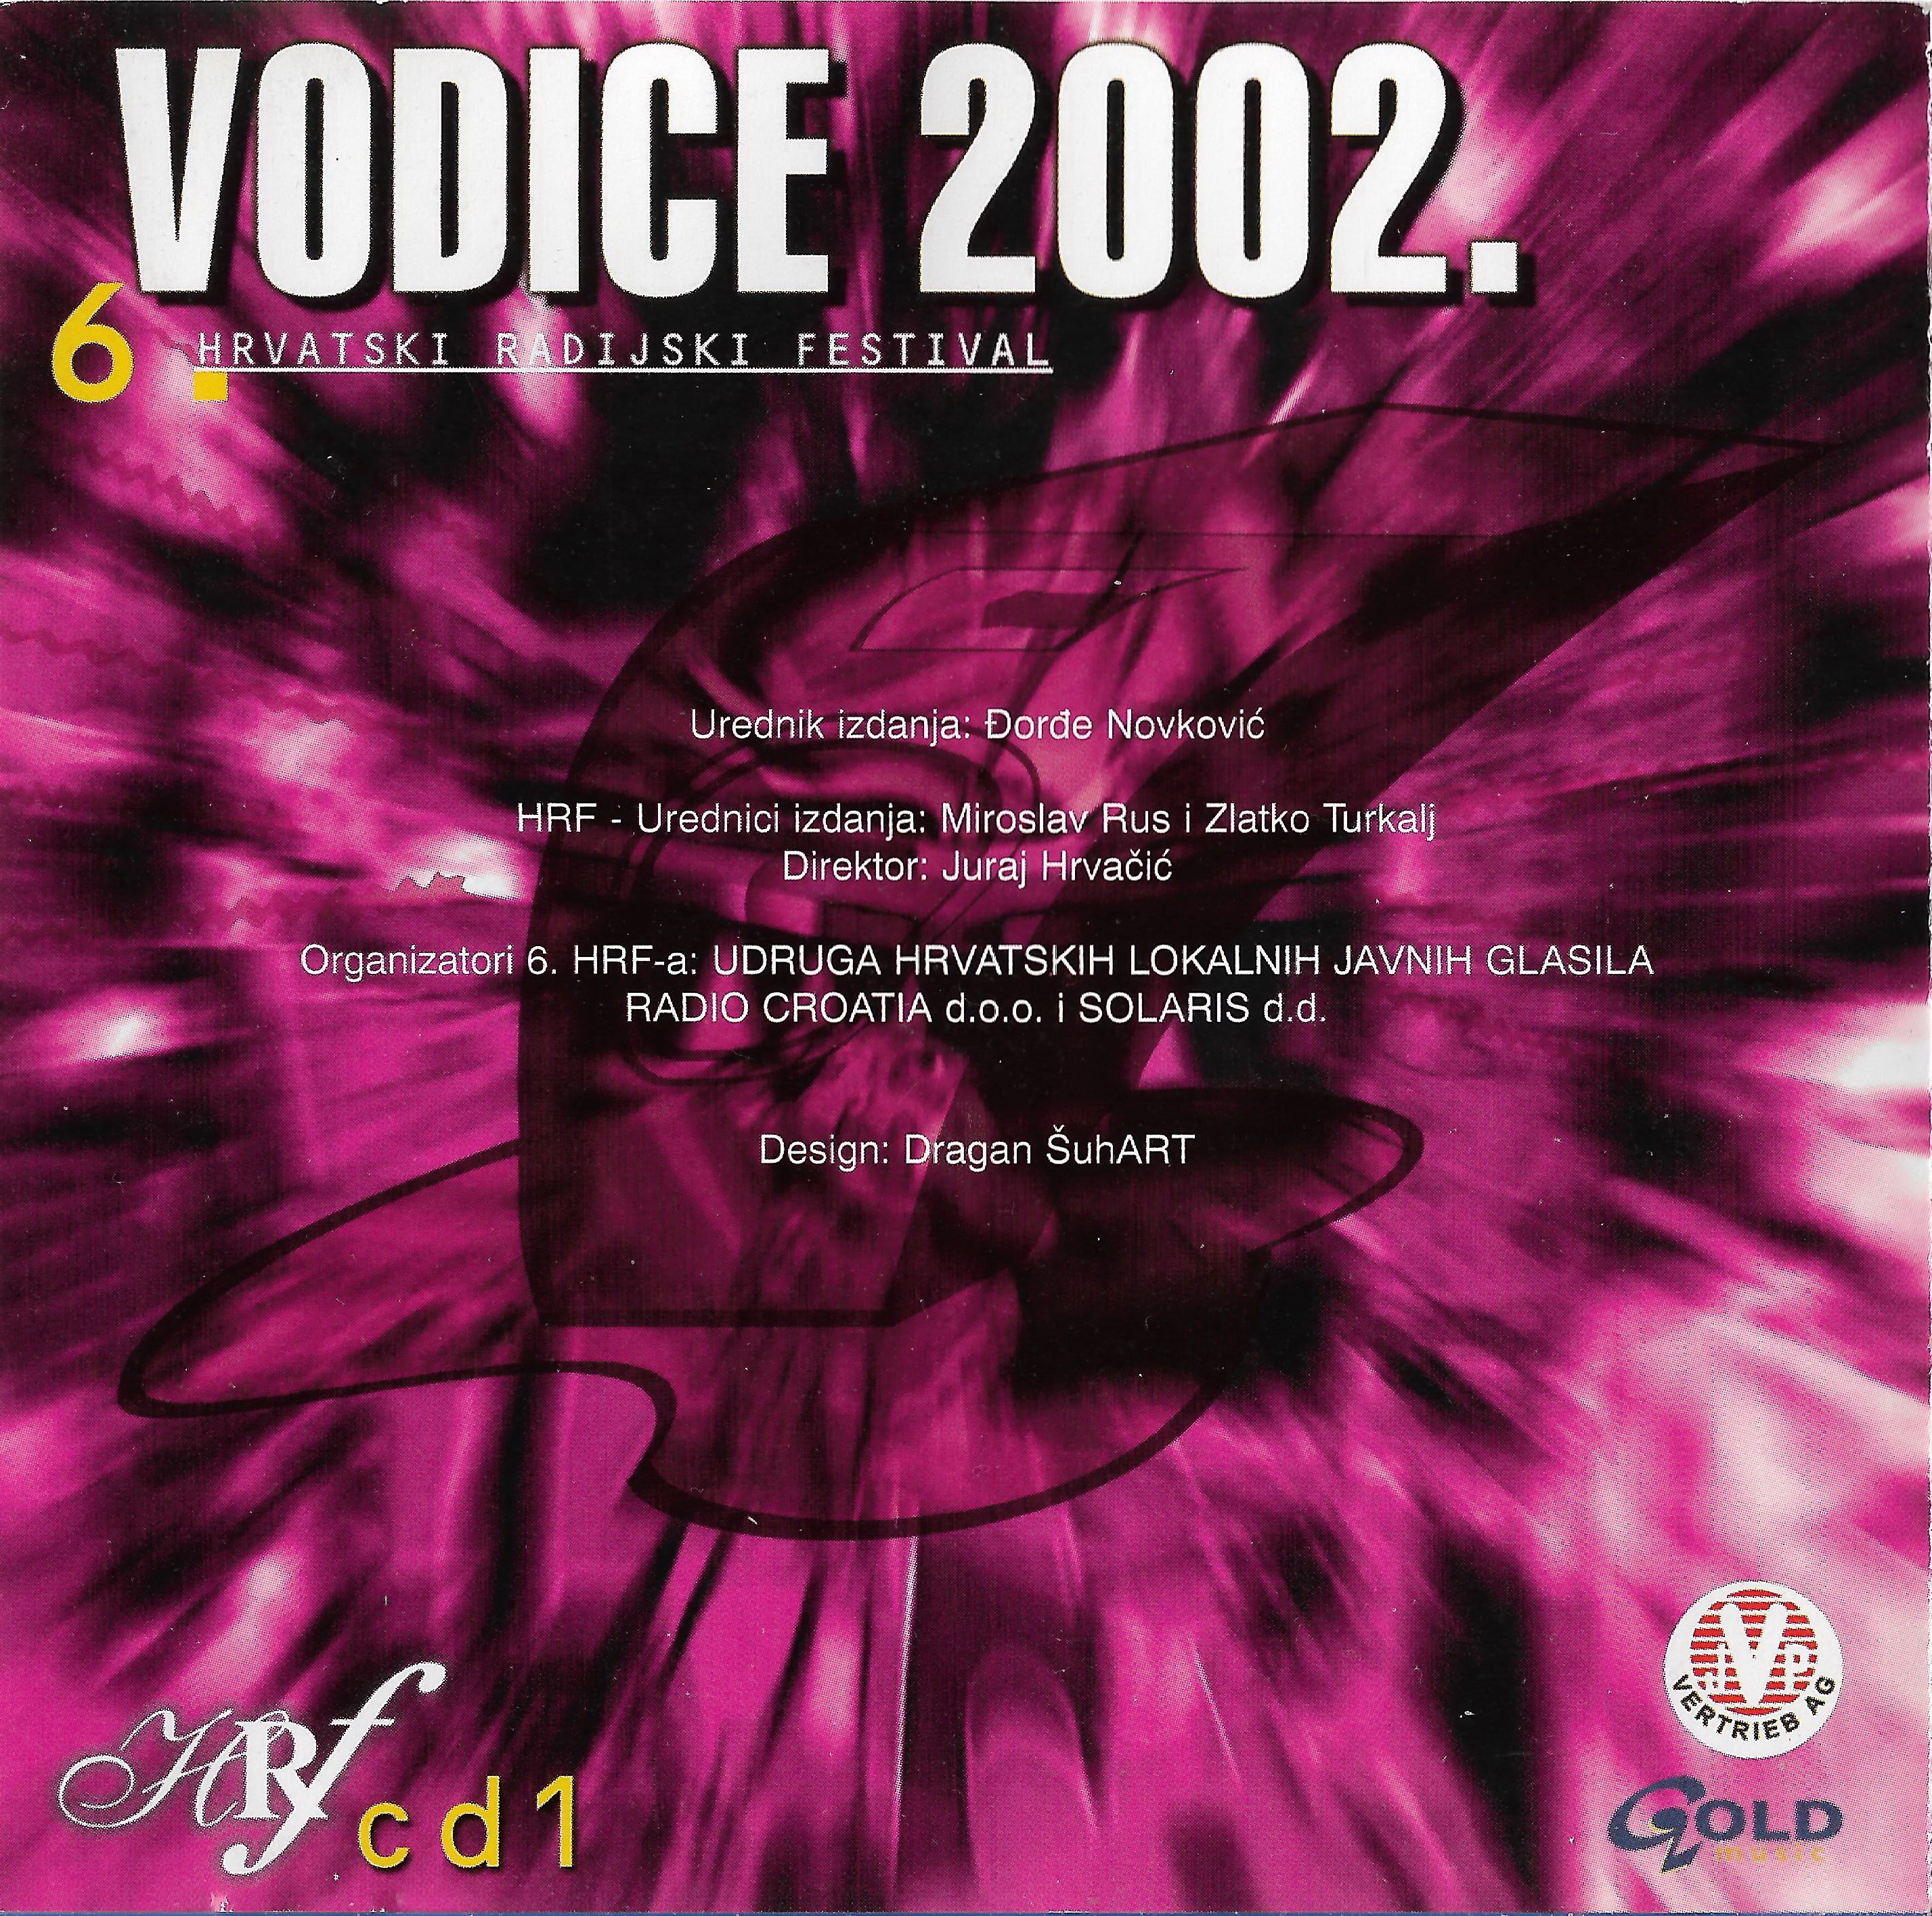 Vodice 2002 CD 1 1 b